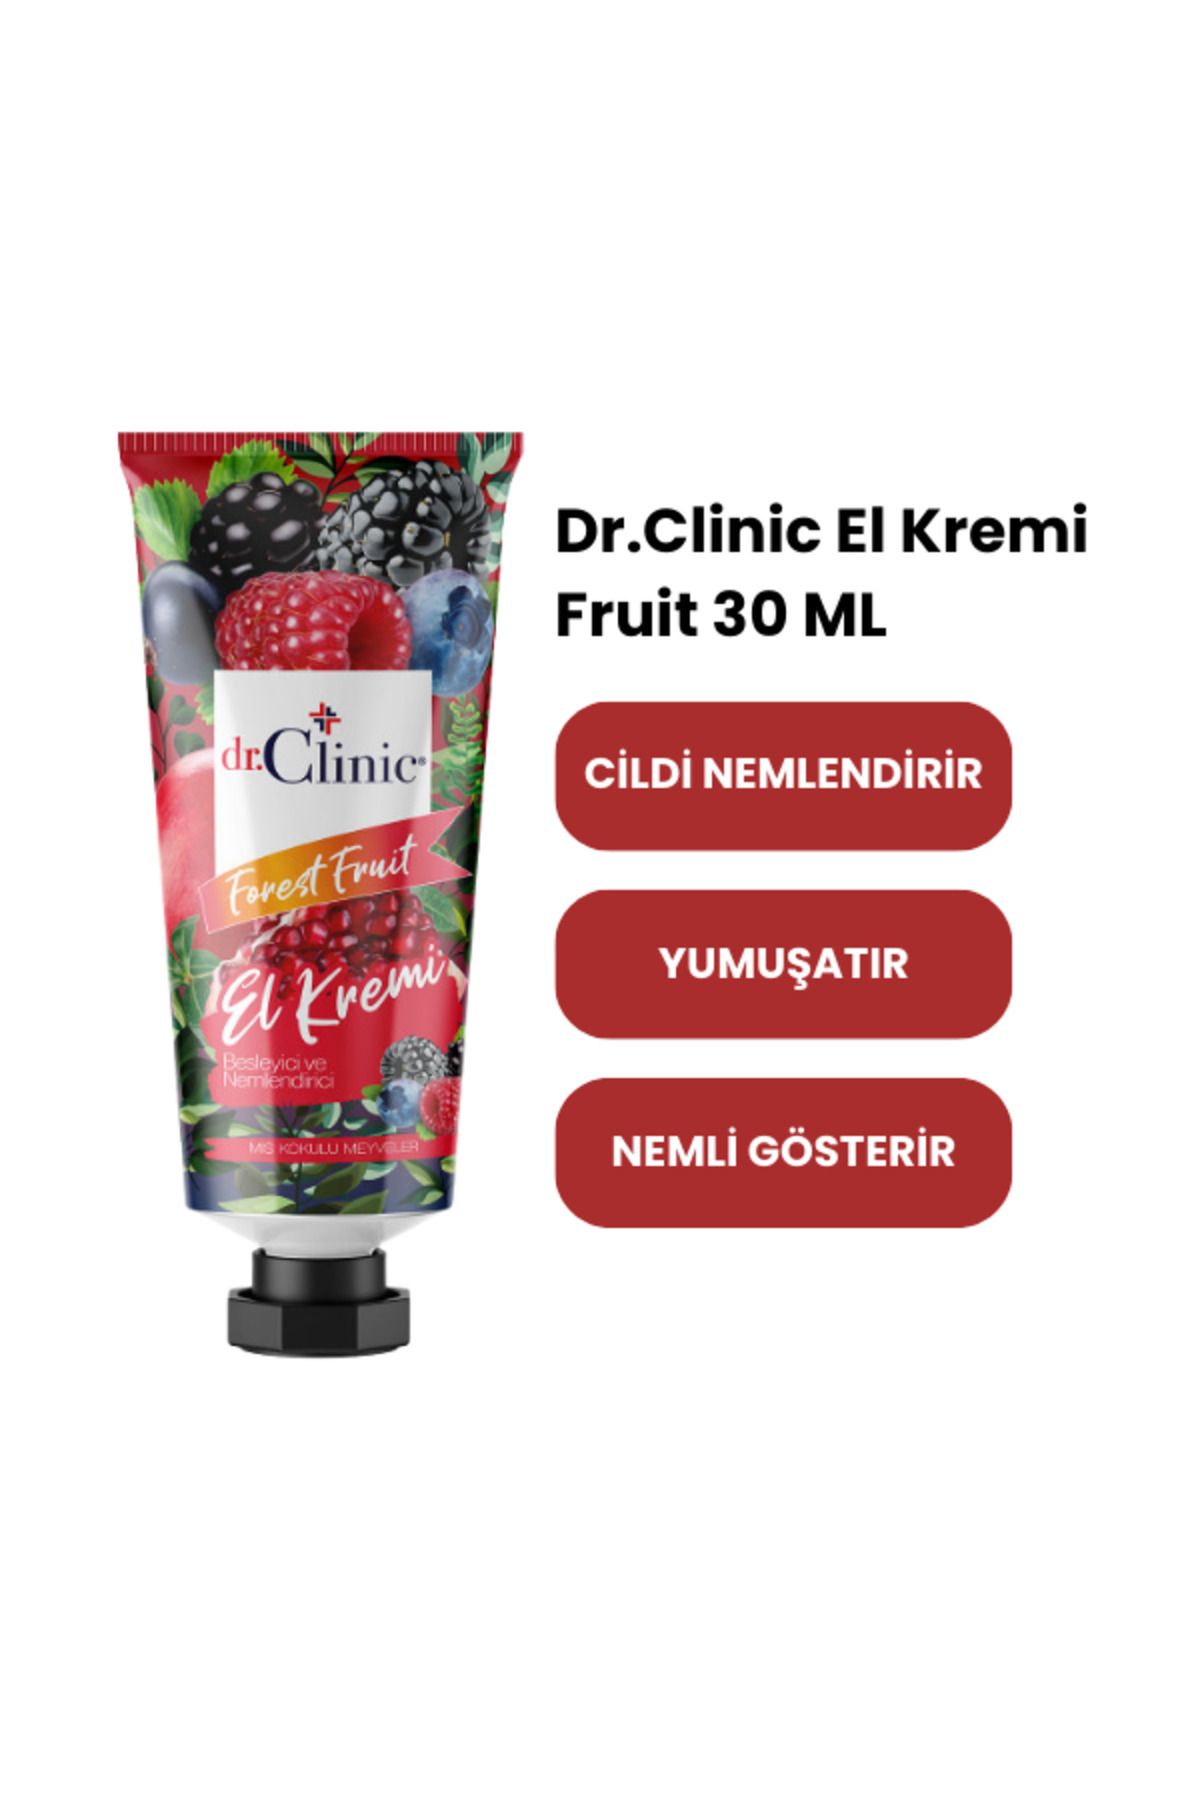 Dr. Clinic El Kremi Fruit 30 ml